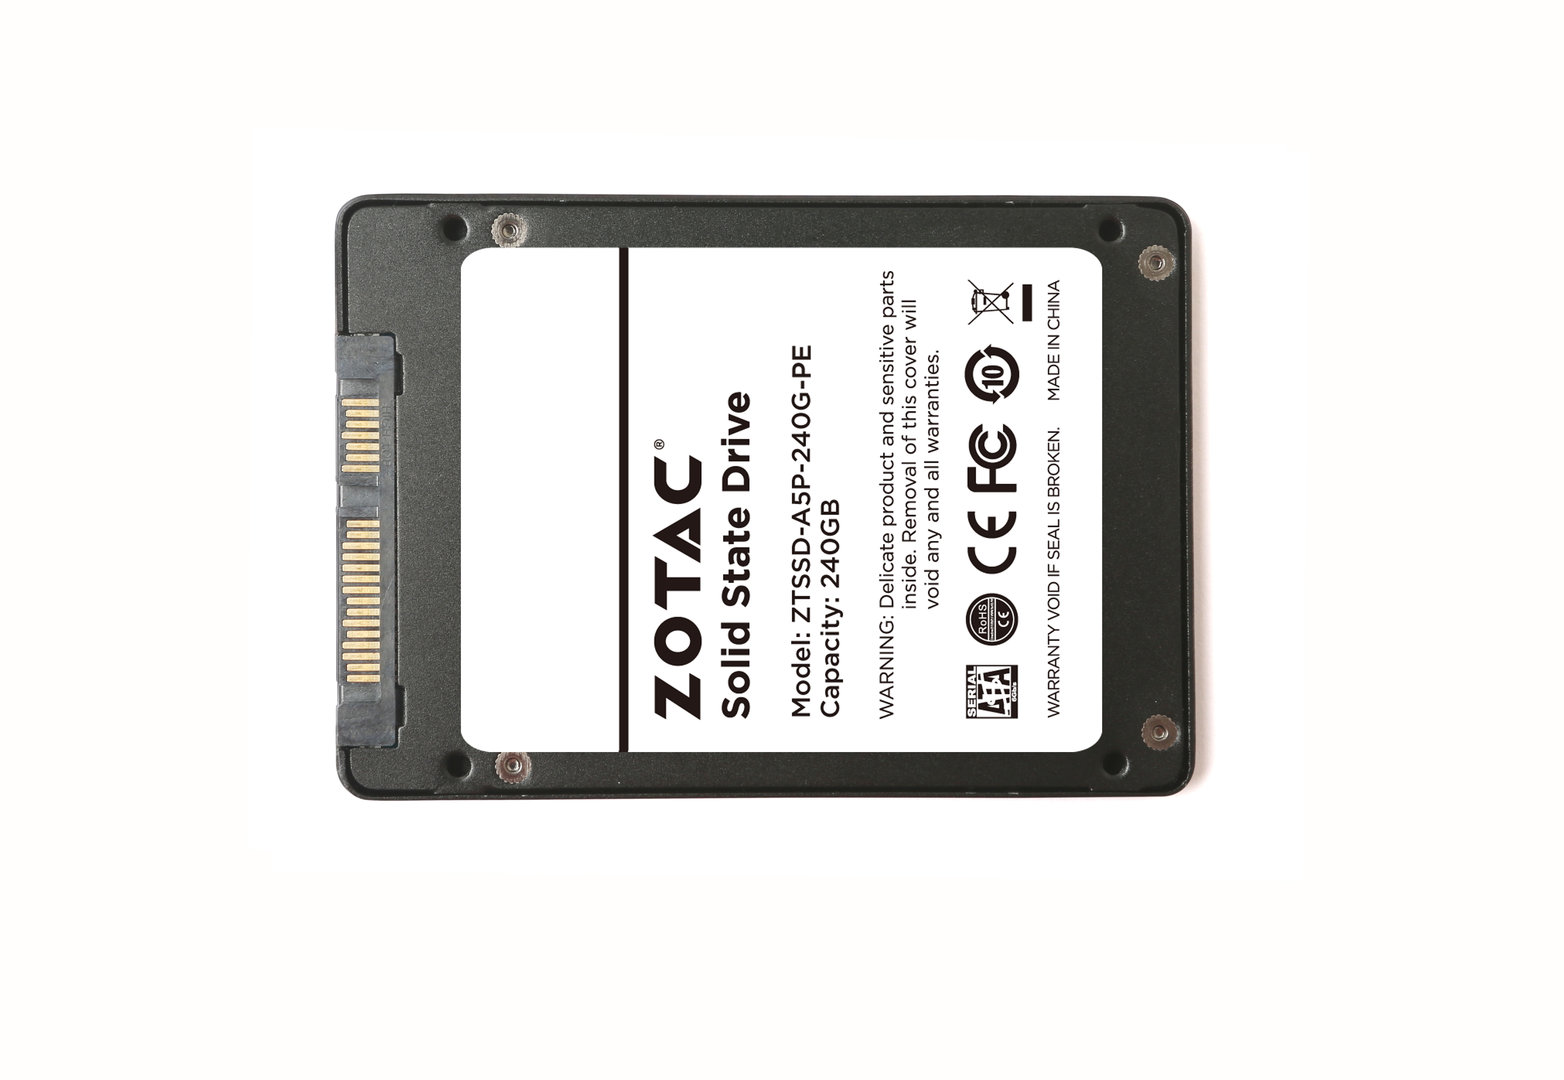 Zotac Premium SSD 240 GB